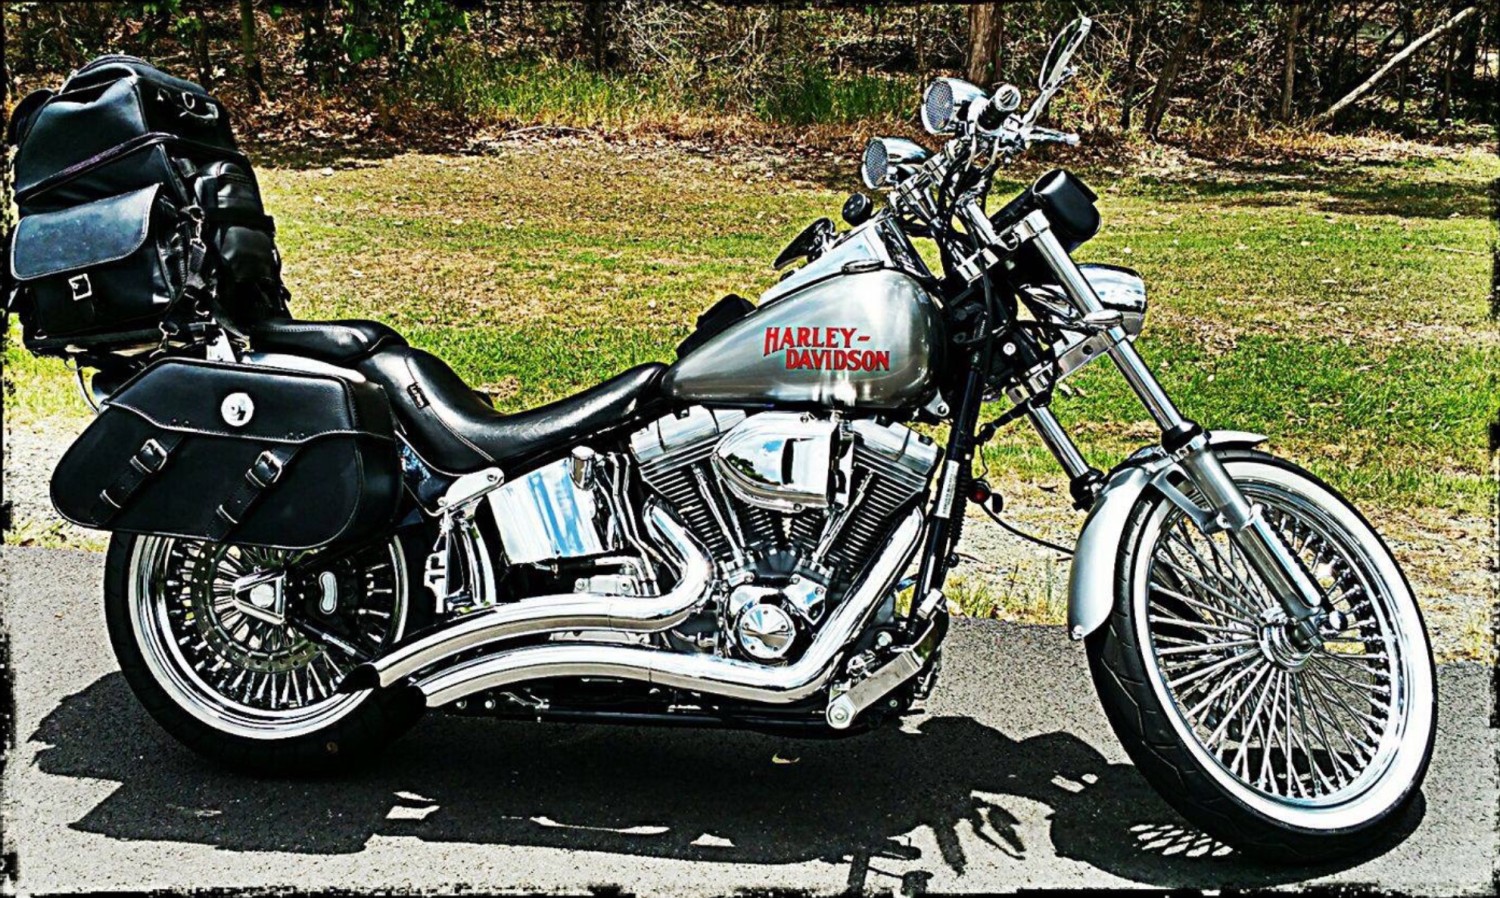 2007 Harley-Davidson 1584cc Softail fxst